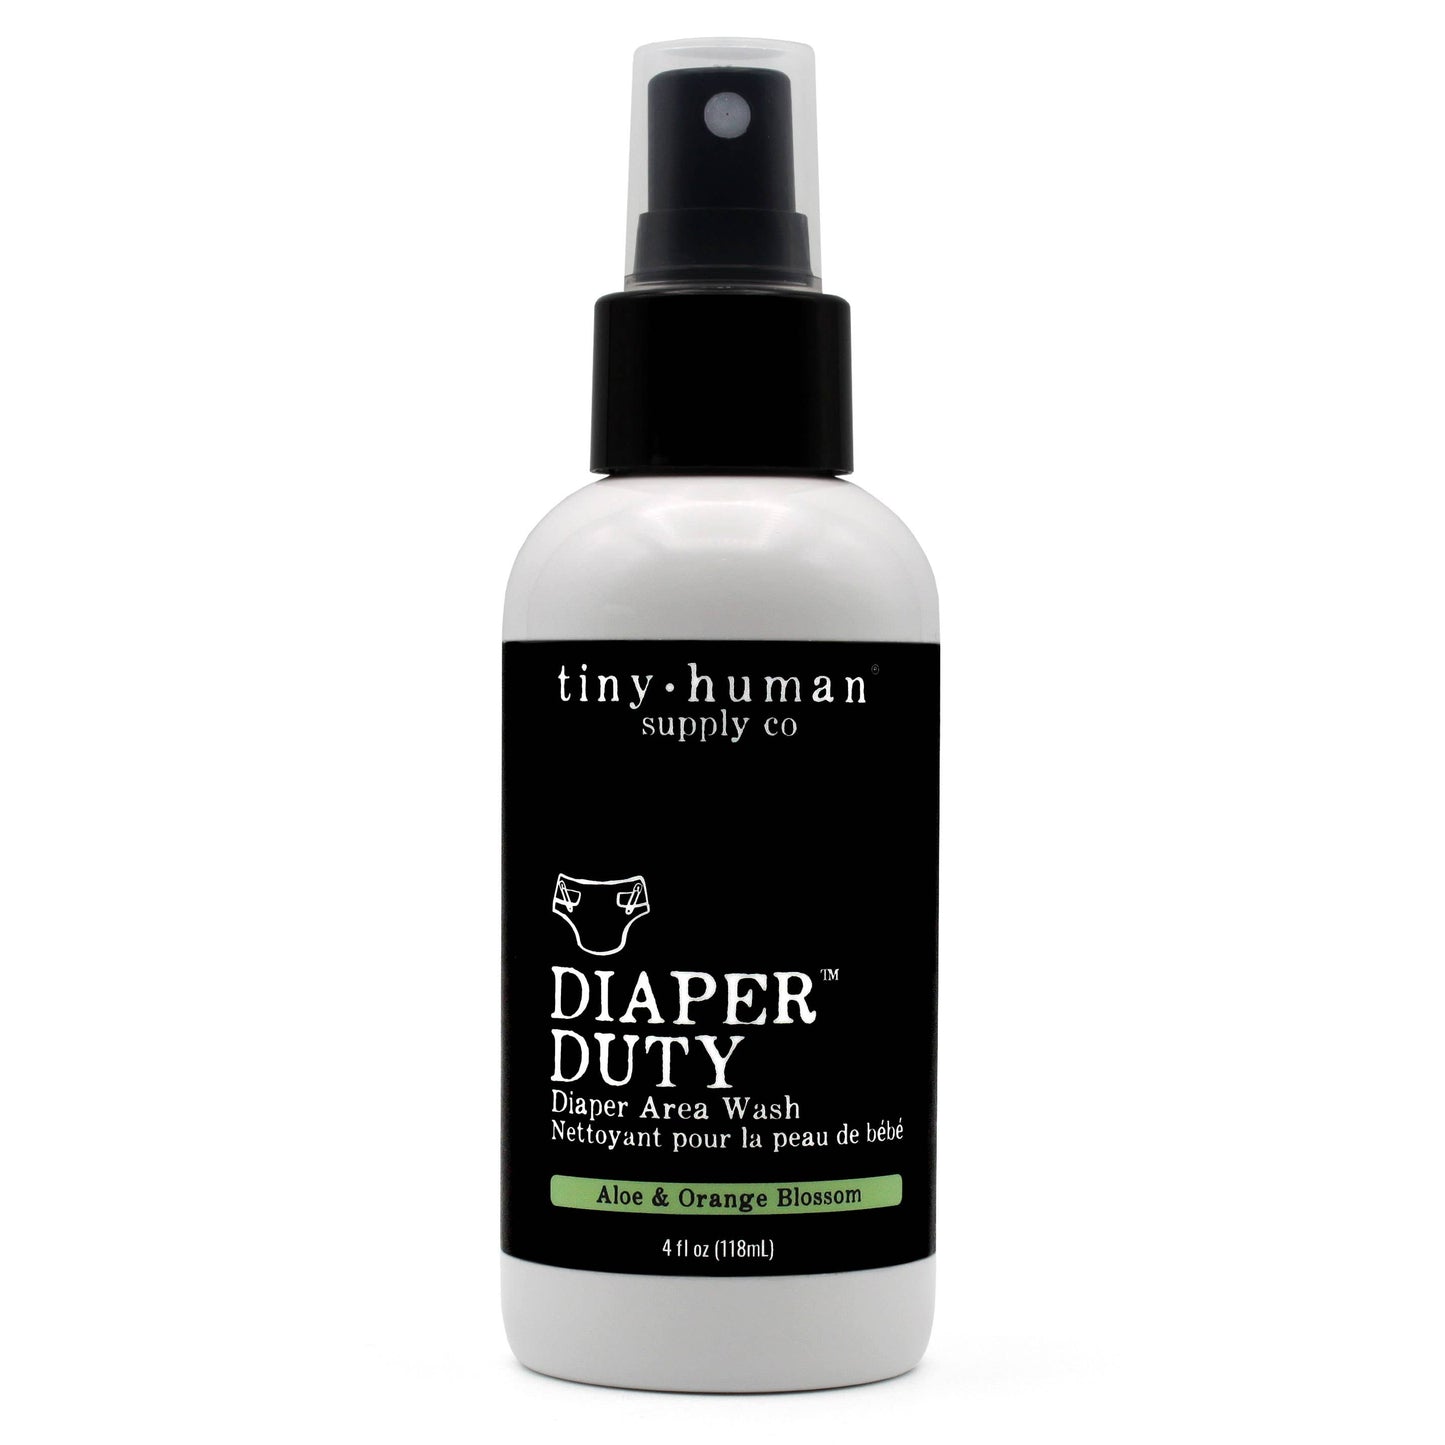 tiny human supply co. diaper duty diaper area wash